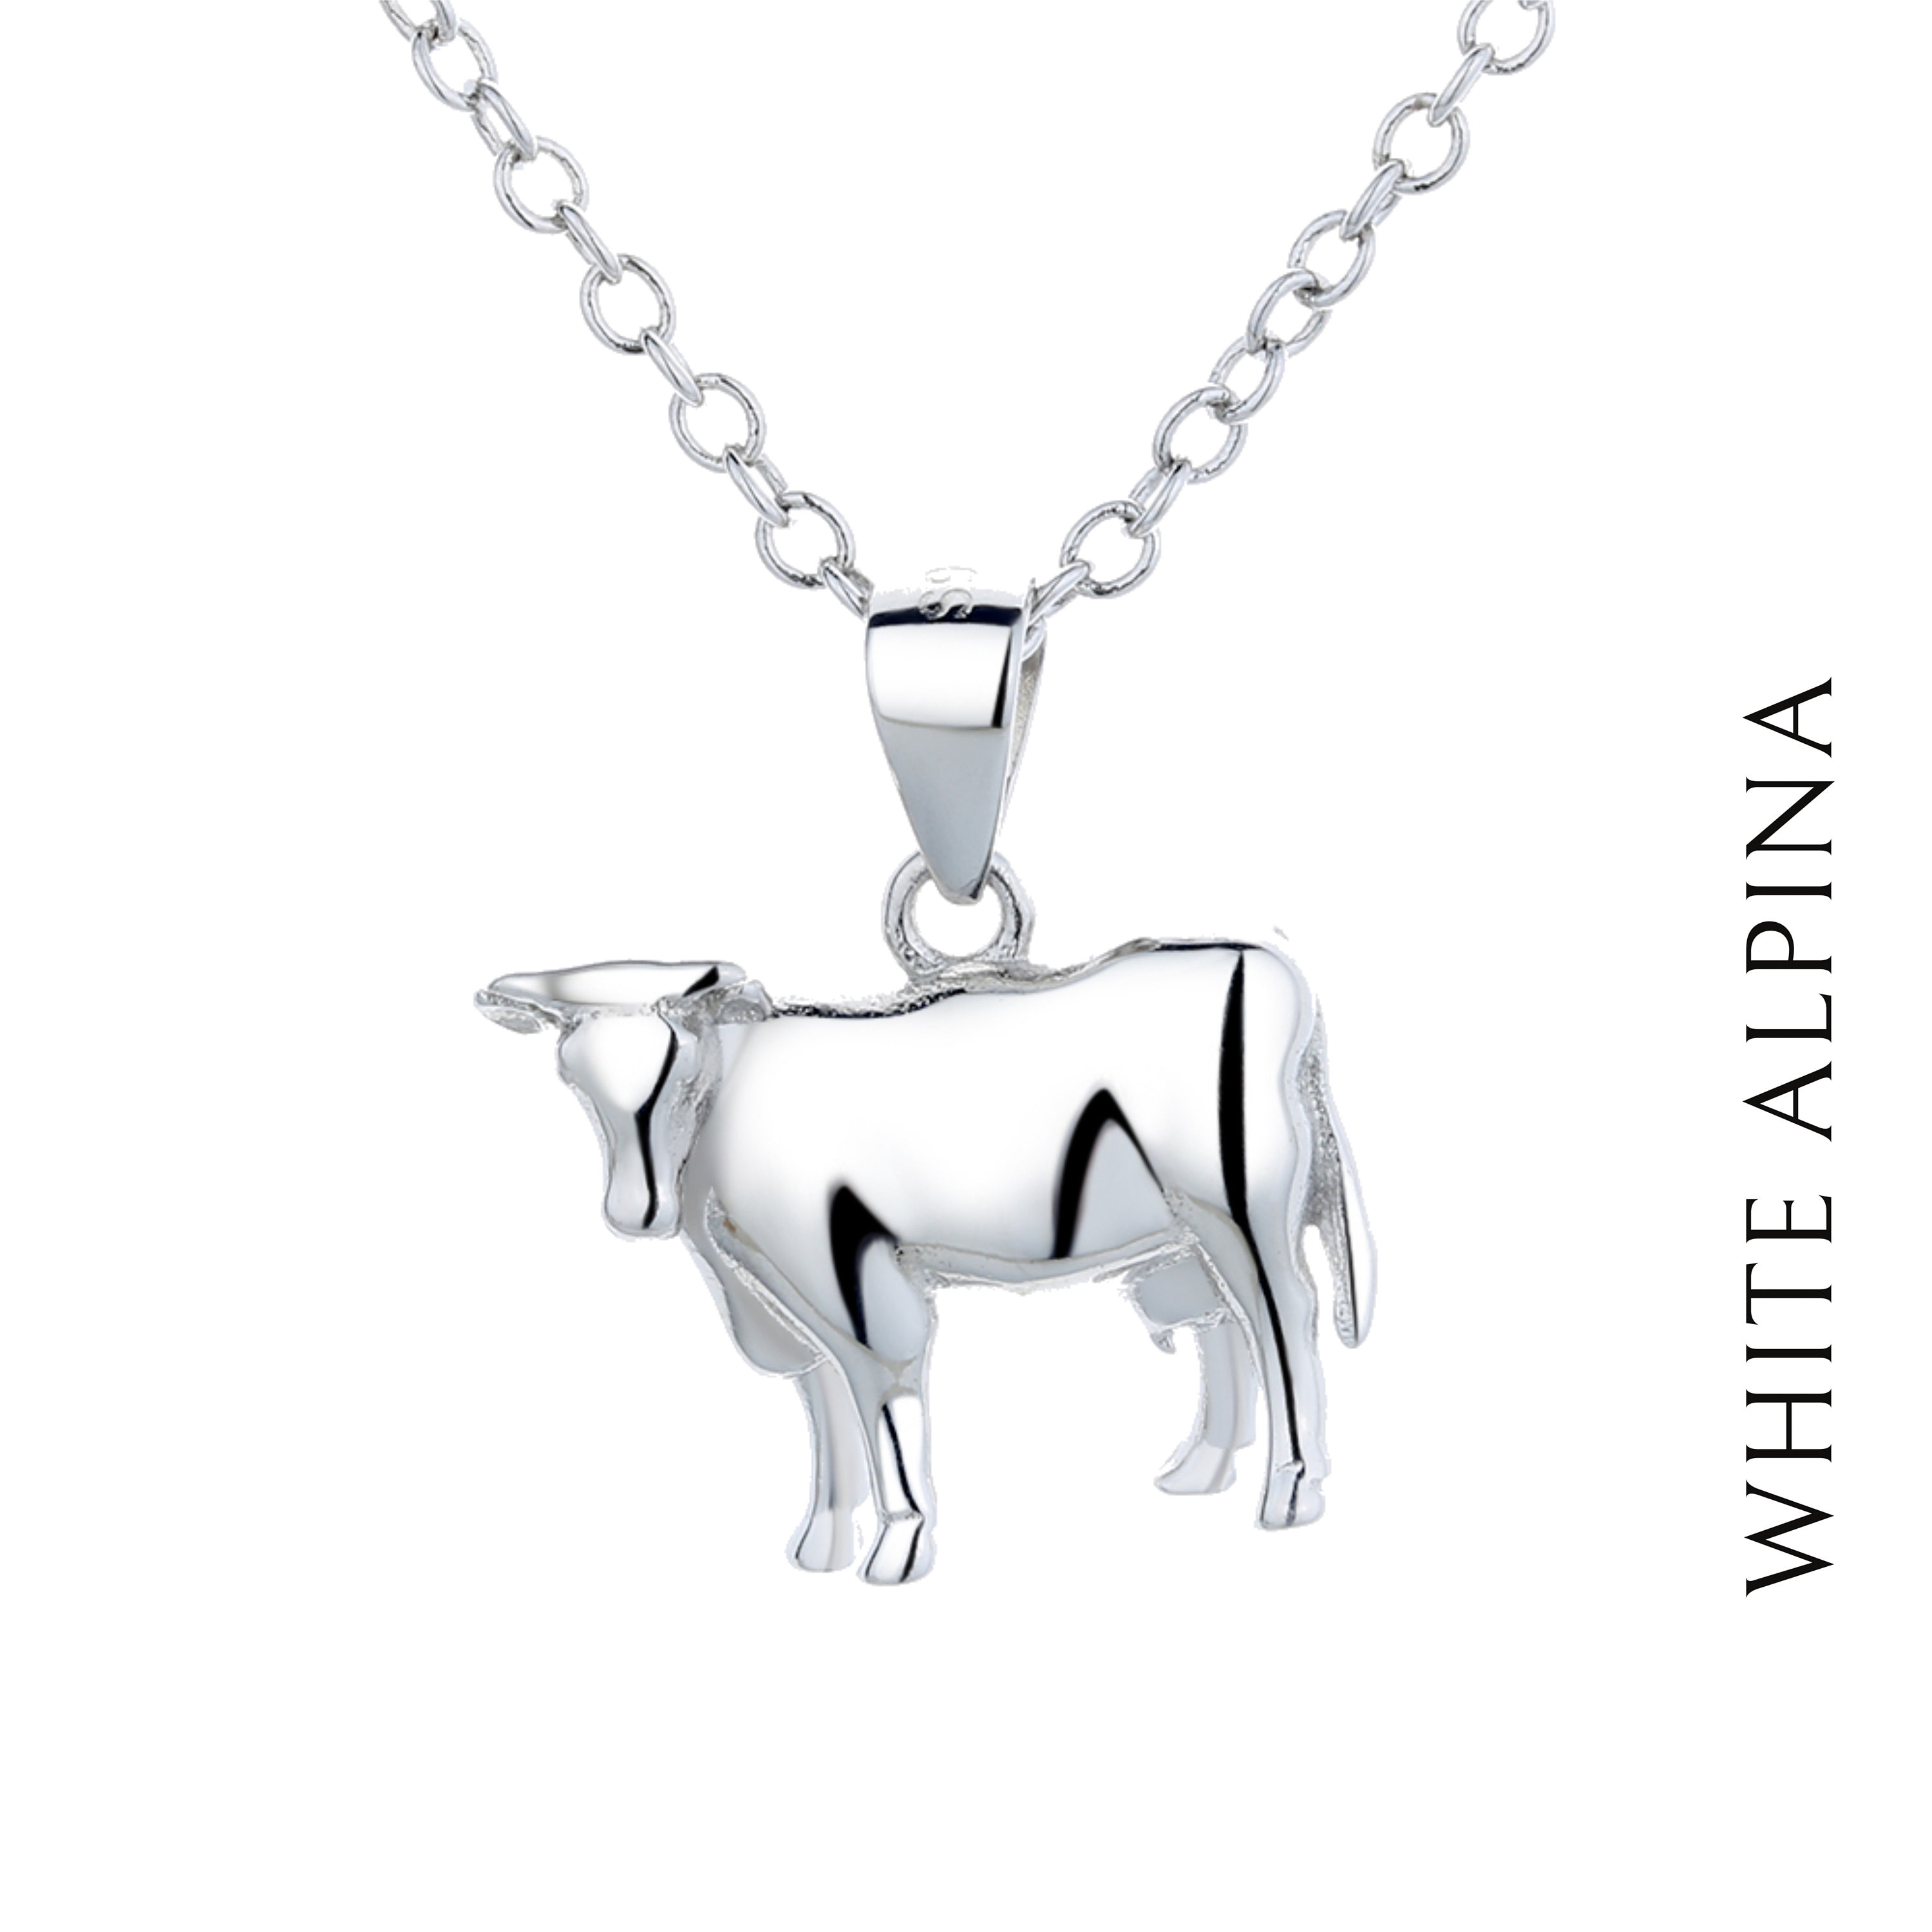 Silver Cow Charm, Antique Silver Cow Pendant, Animal Lover Charm, Farm Animal Pendant, Made in USA, 21mm - AB166